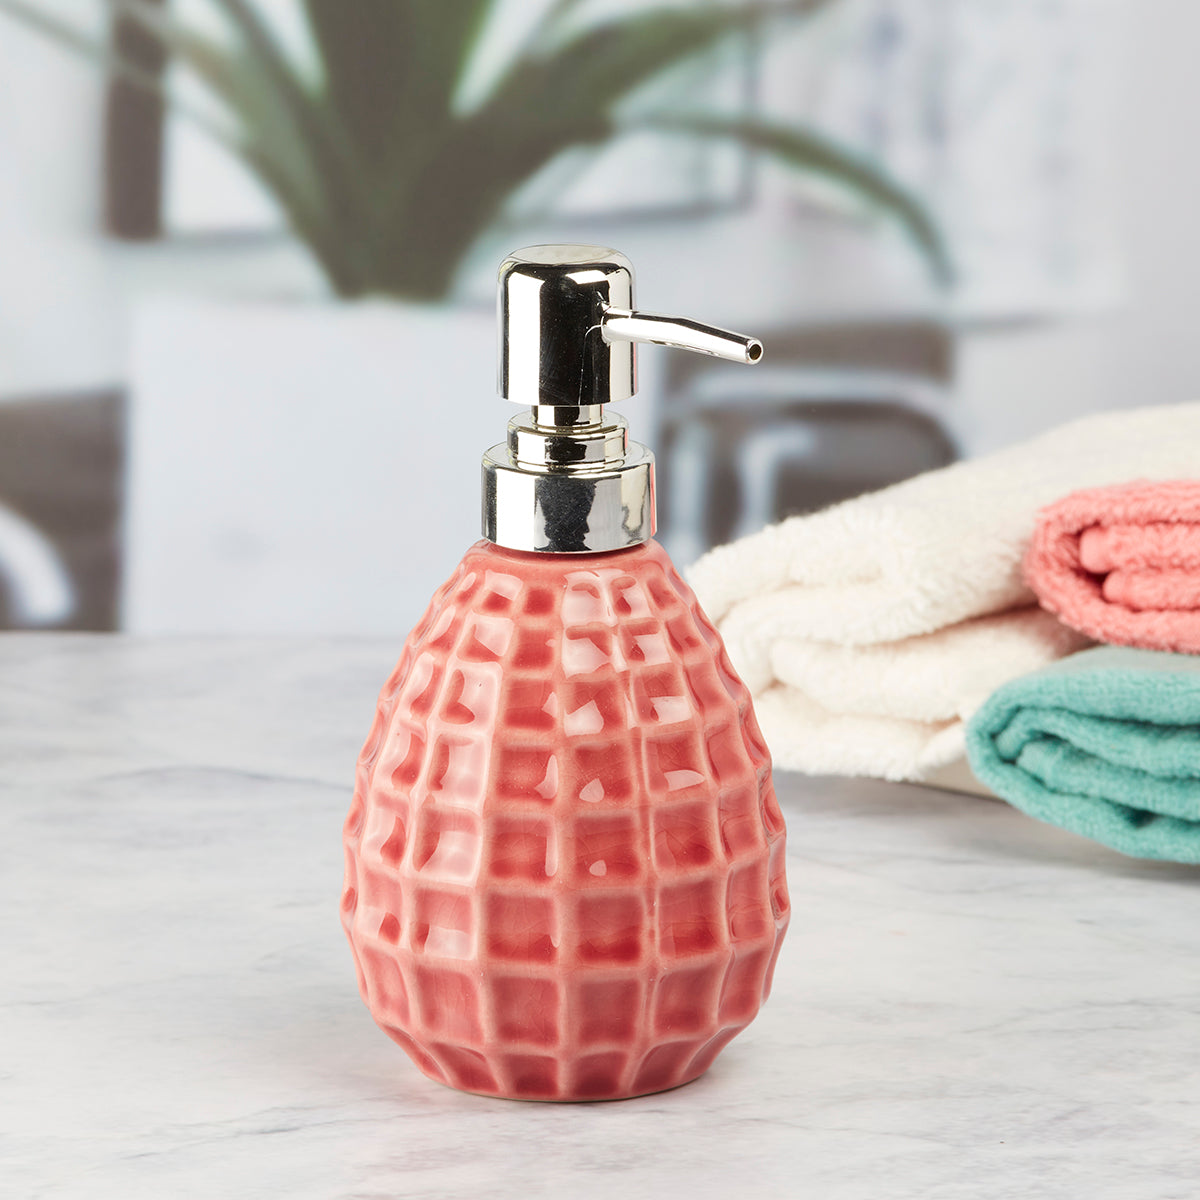 Ceramic Soap Dispenser handwash Pump for Bathroom, Set of 1, Peach (7626)